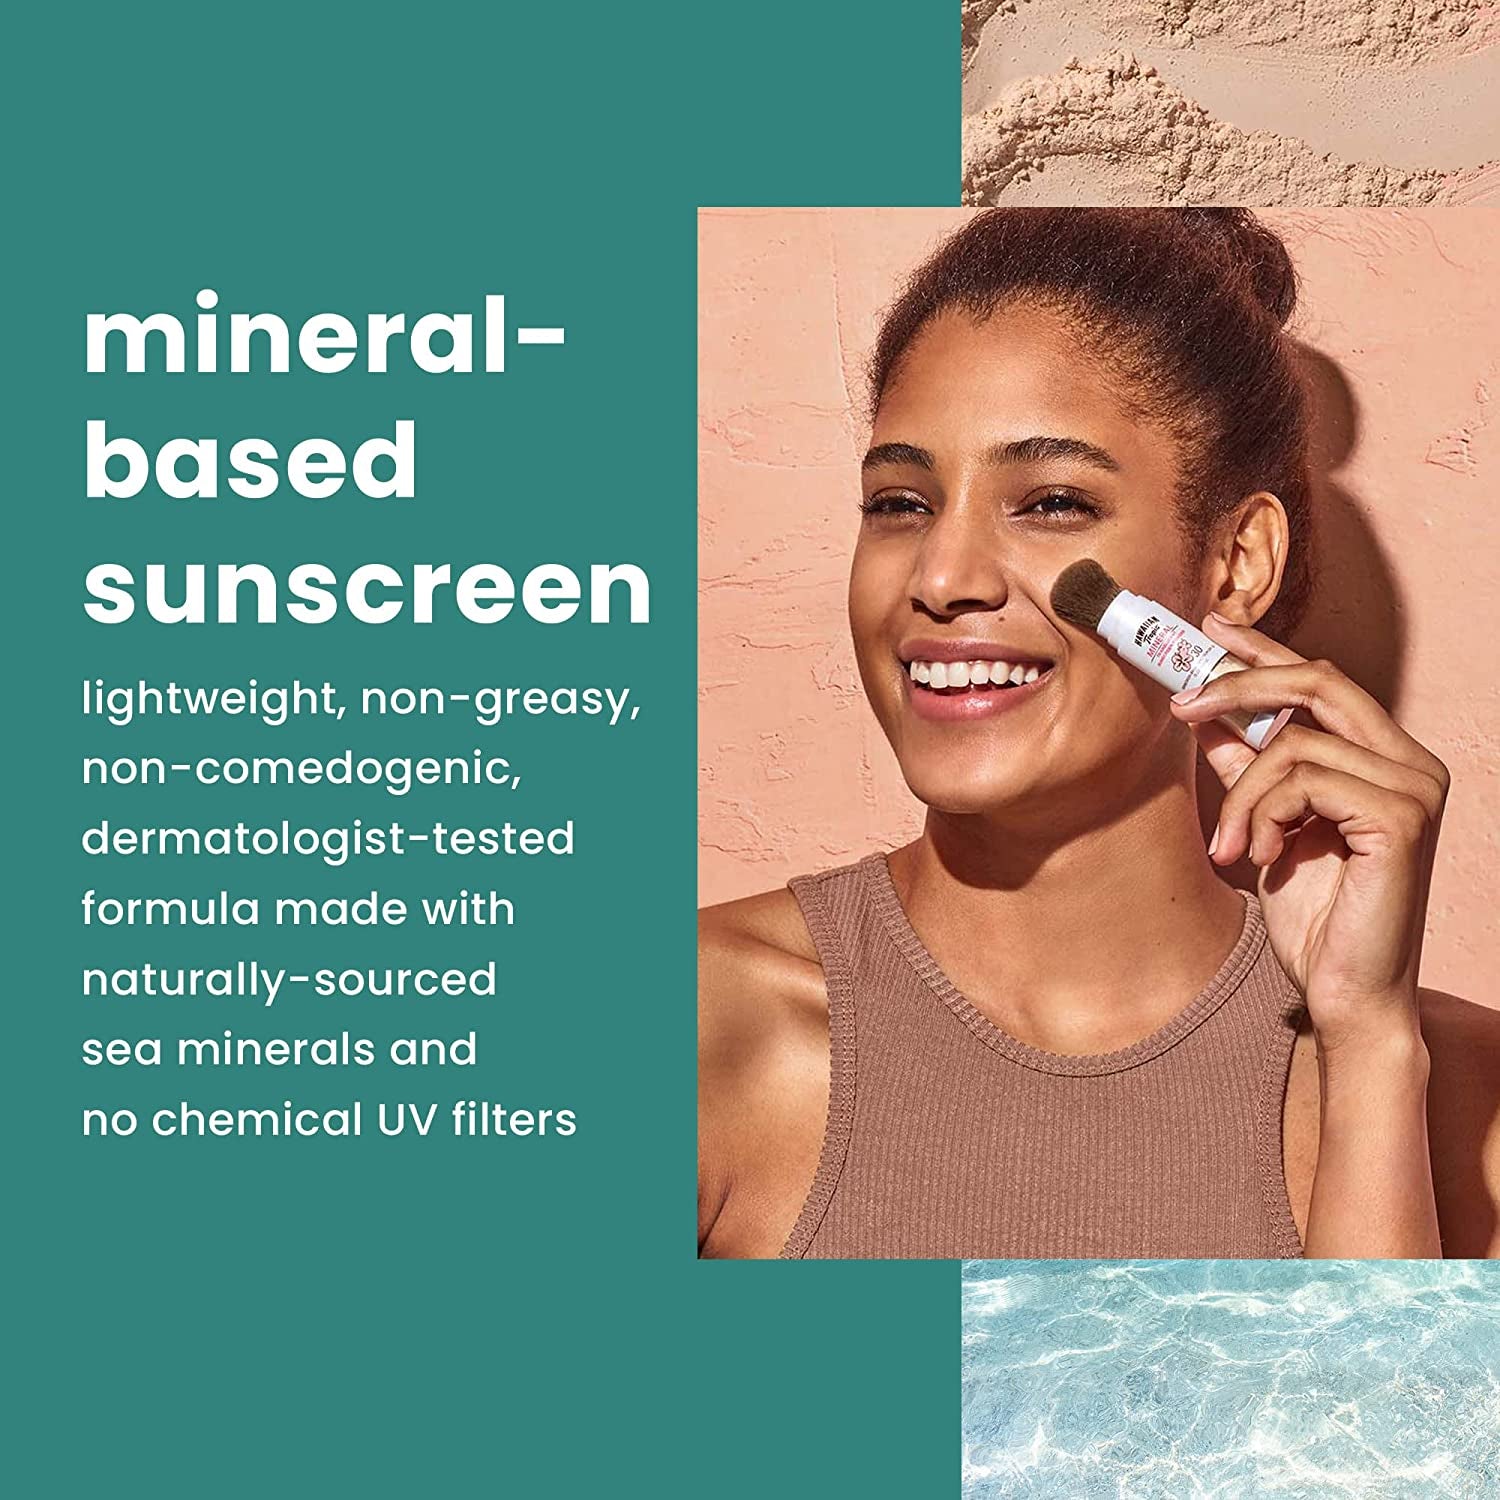 "Hawaiian Tropic SPF 30 Mineral Powder Sunscreen Brush - Sun Protection On-The-Go!"